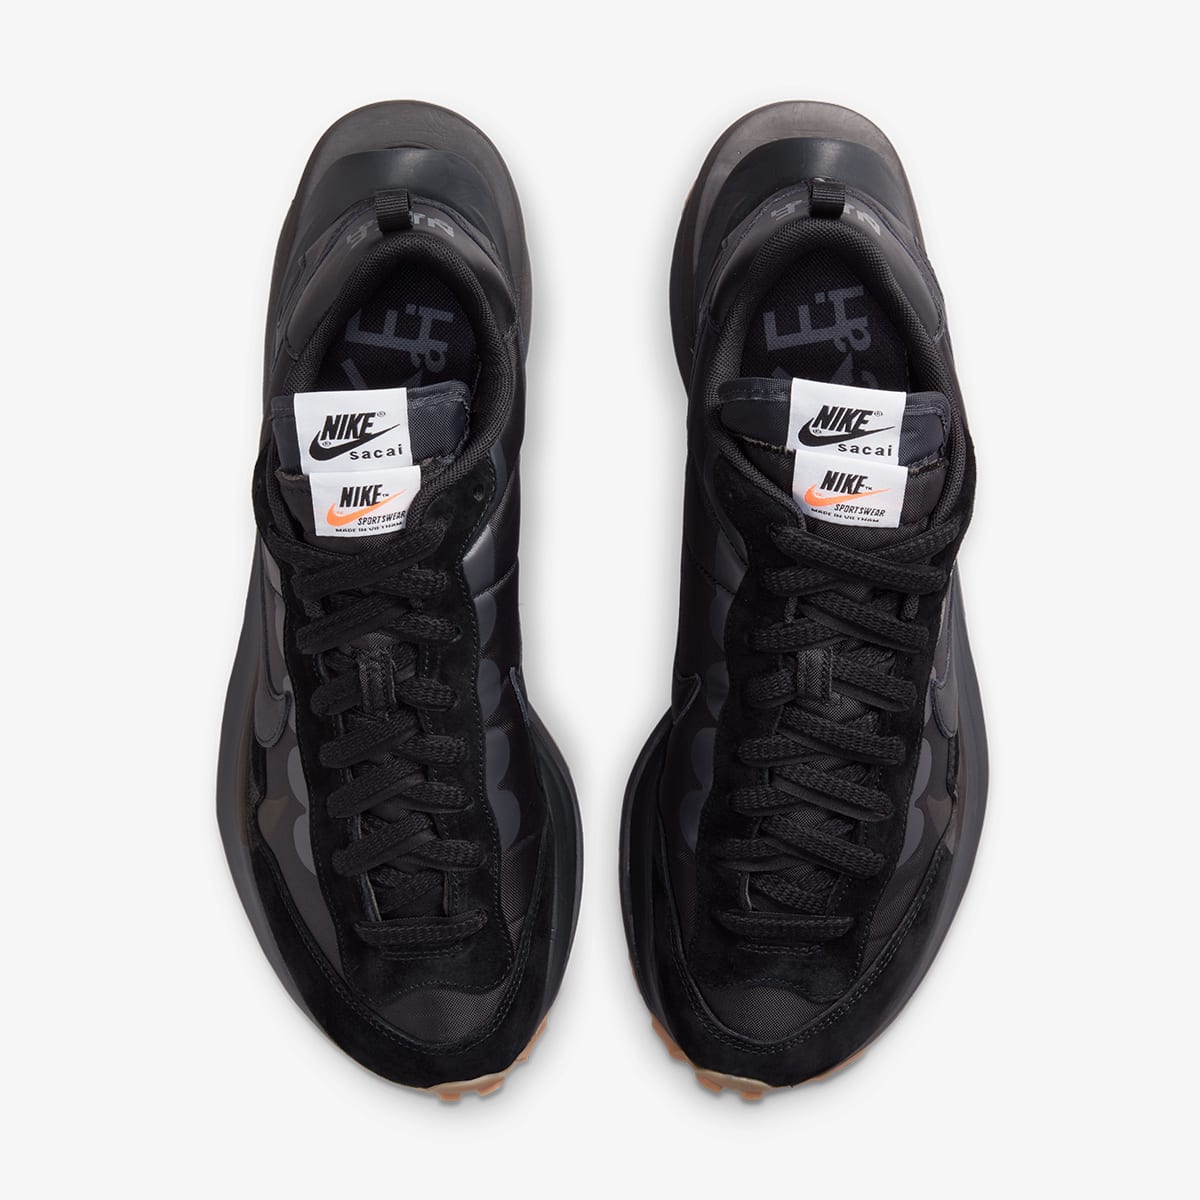 Nike x Sacai Vaporwaffle (Black & Off Noir) | END. Launches